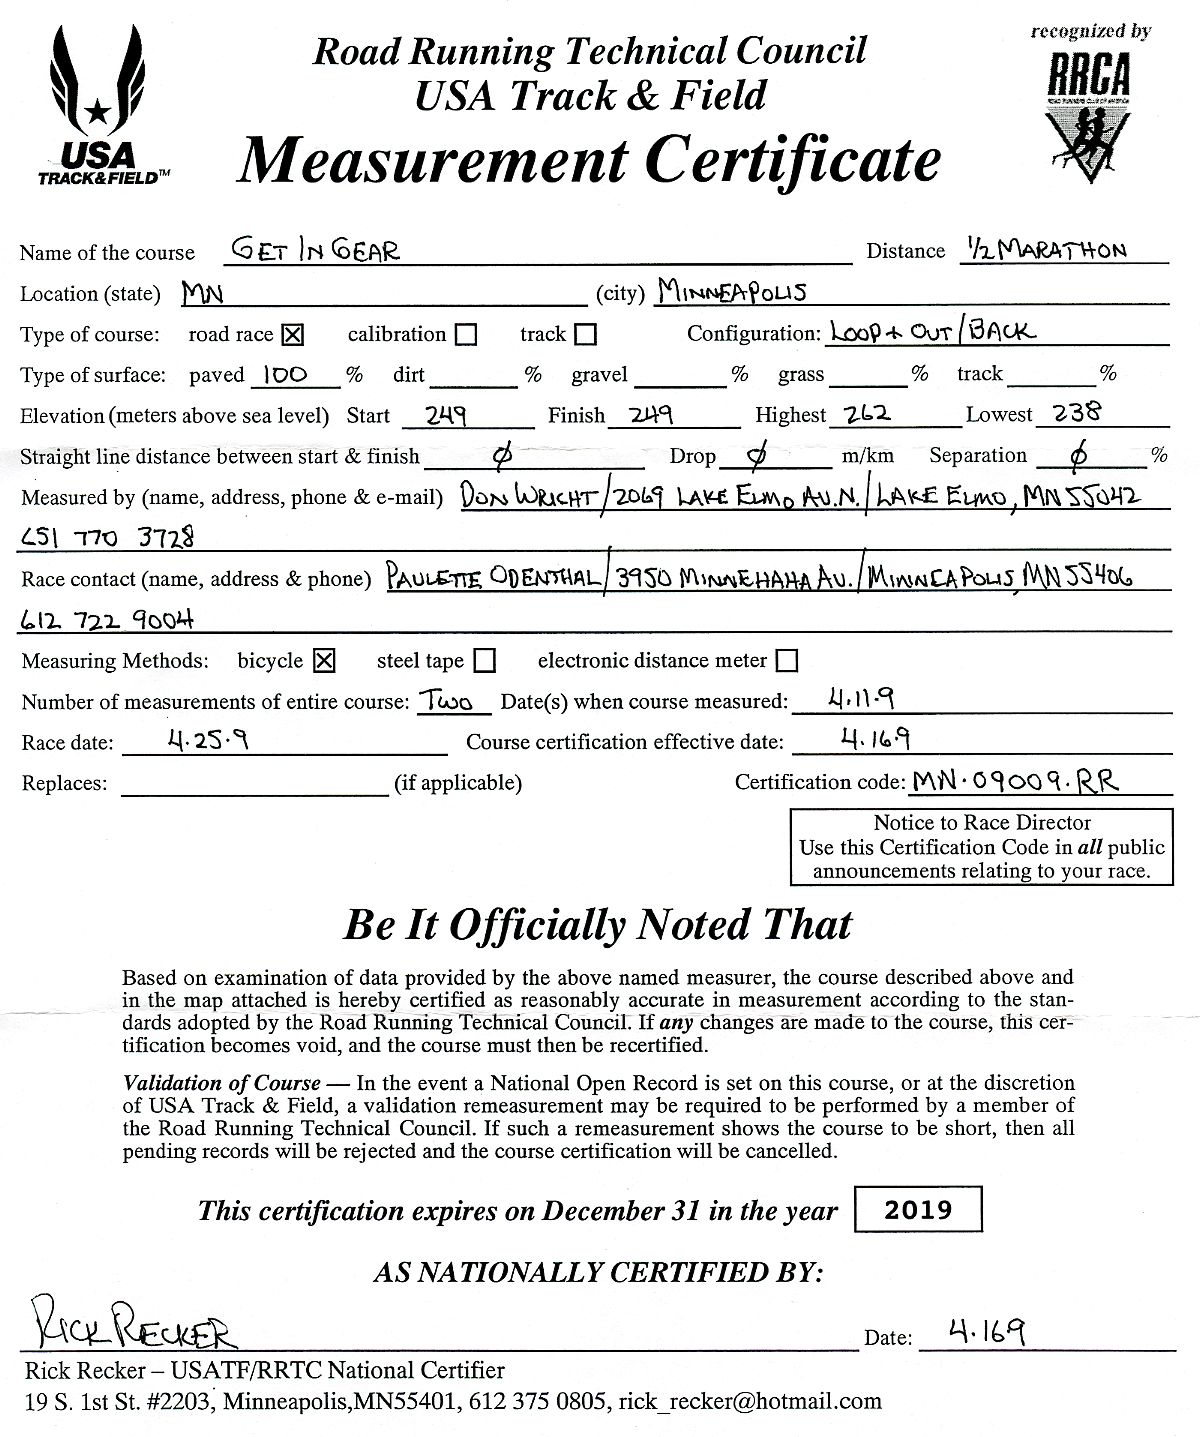 Measurement Certificate MN 09009 RR